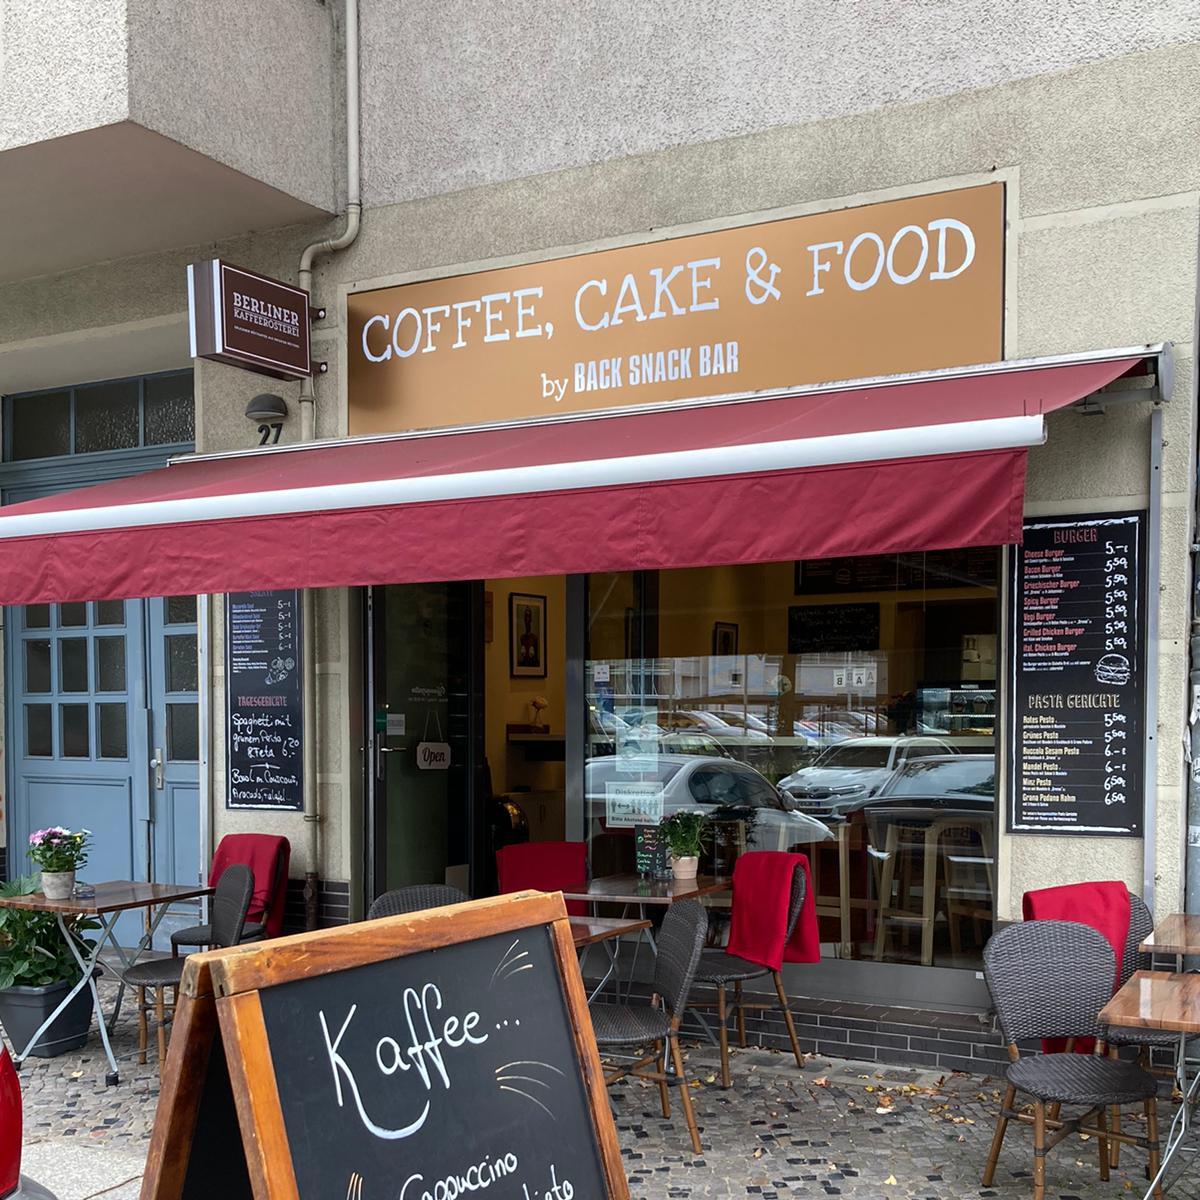 Restaurant "Back Snack Bar , Coffee, Cake & Food" in Berlin